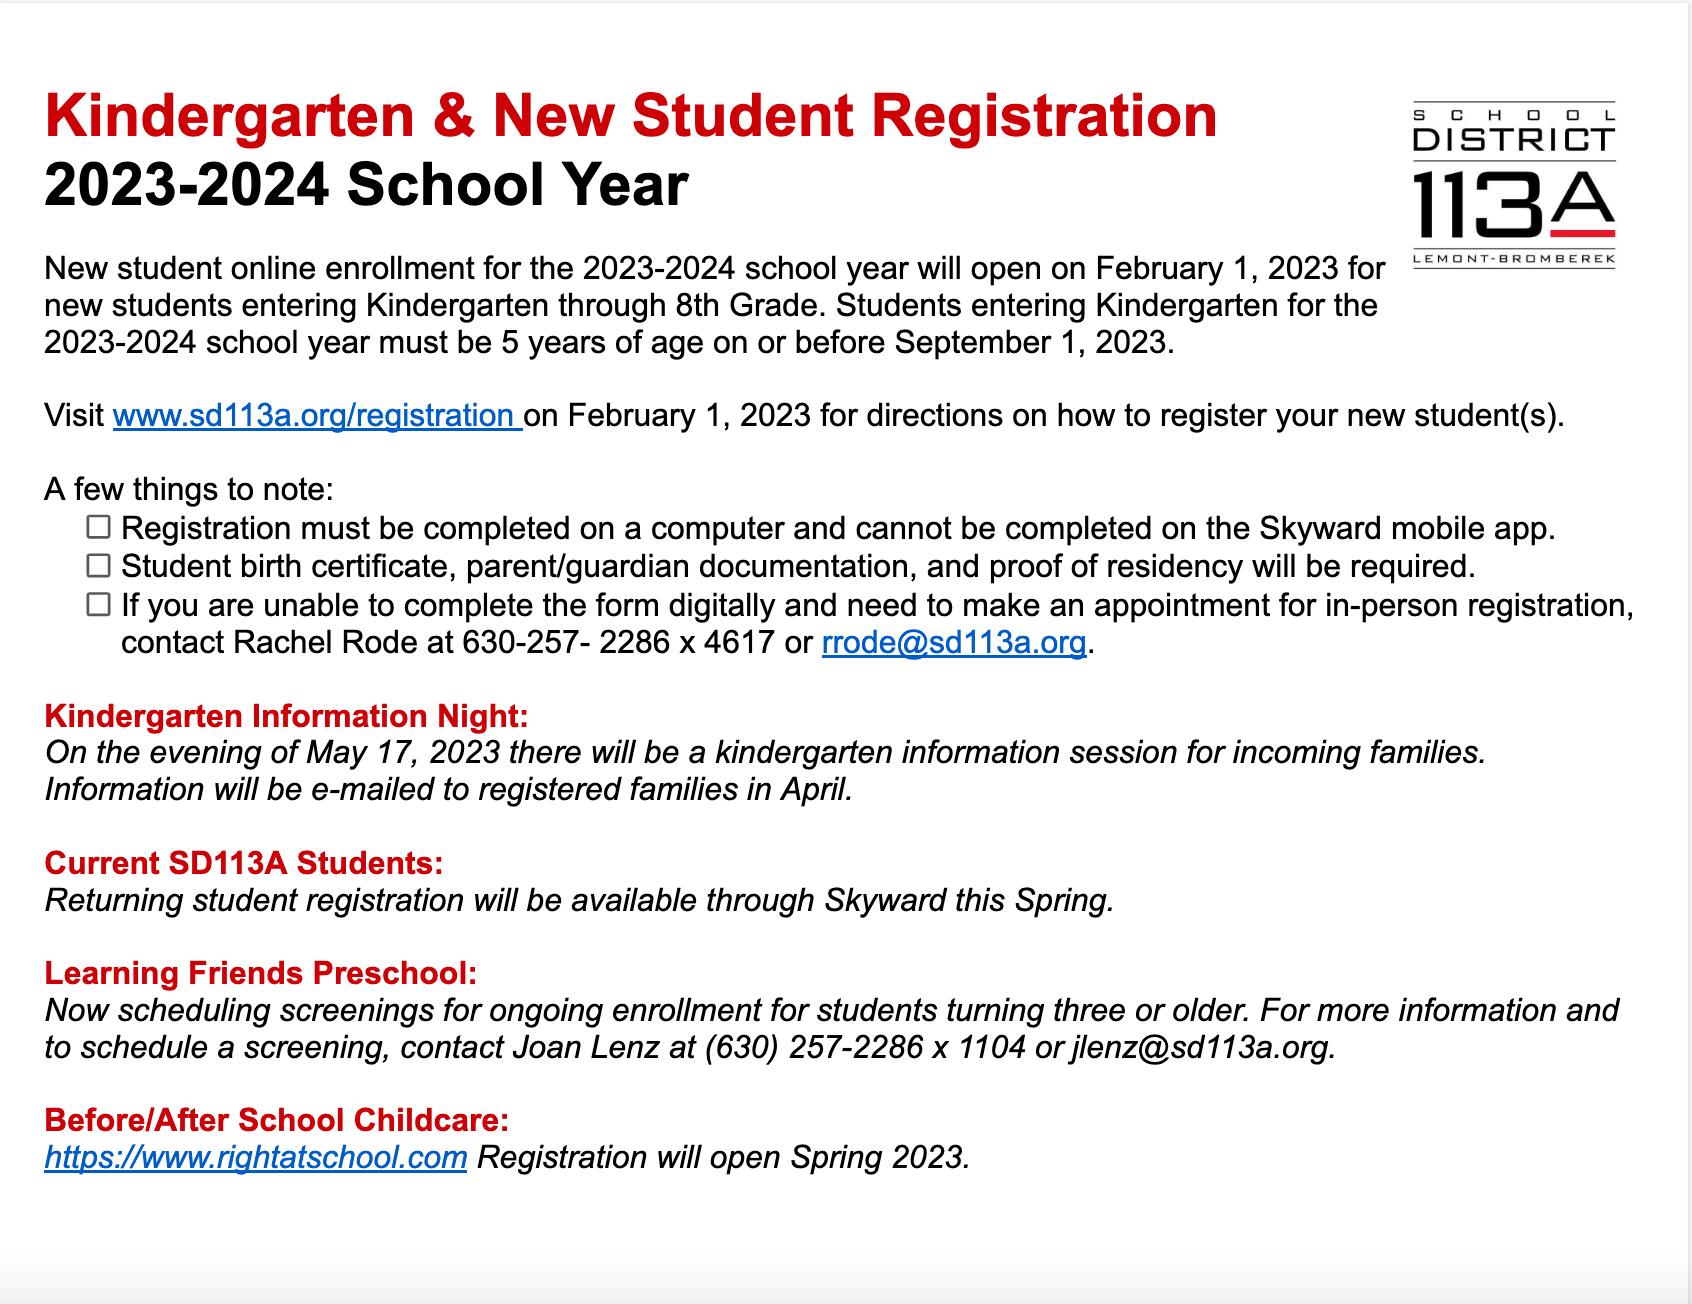 2023-2024 Registration for Kindergarten and New students